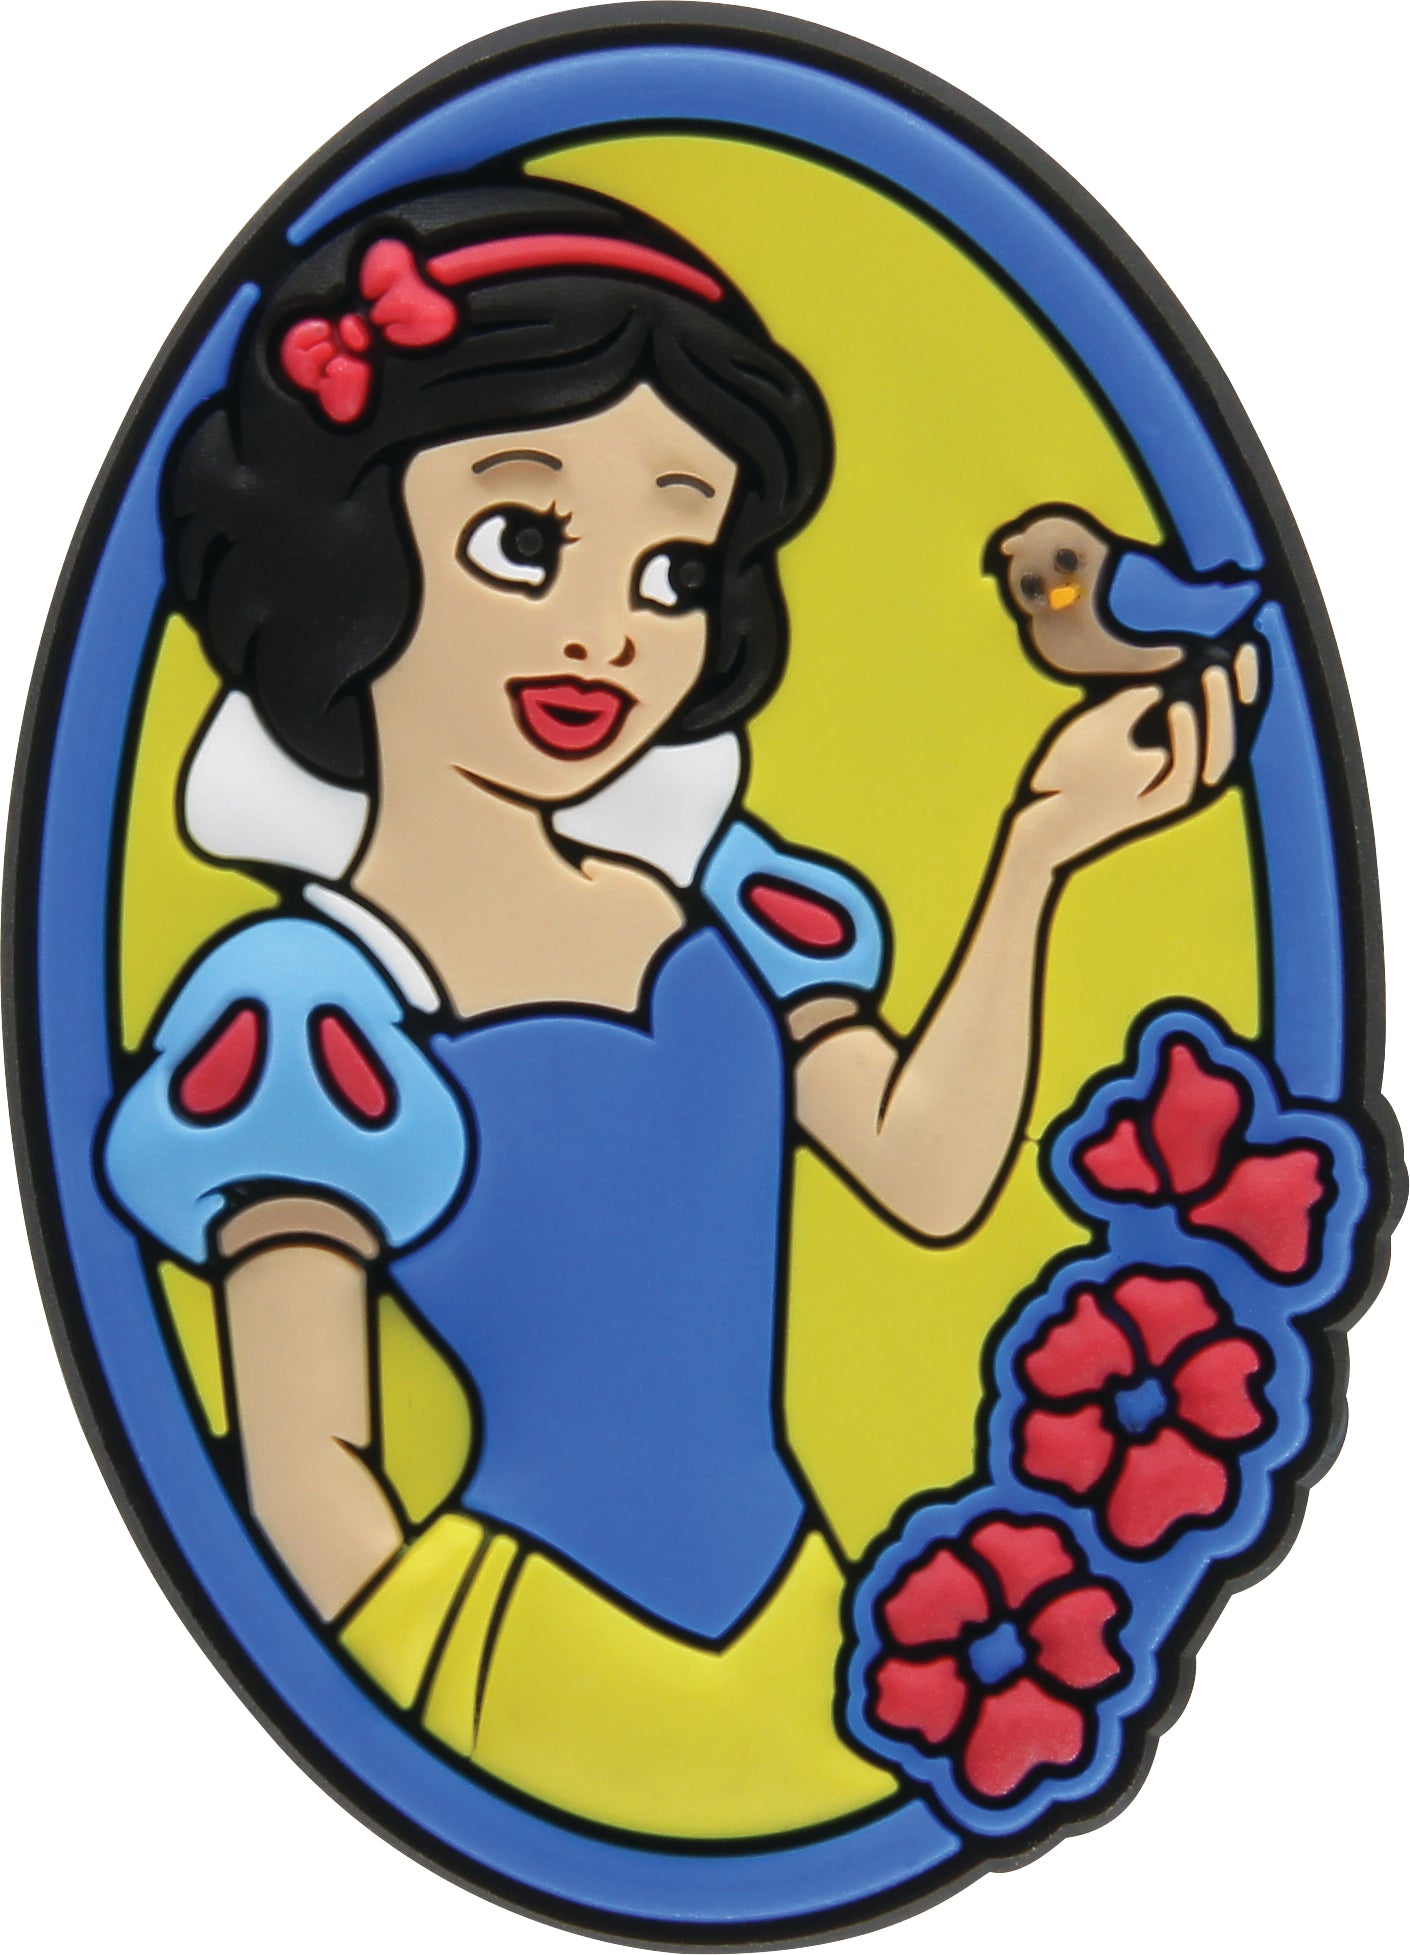 Snow White Badge SS17